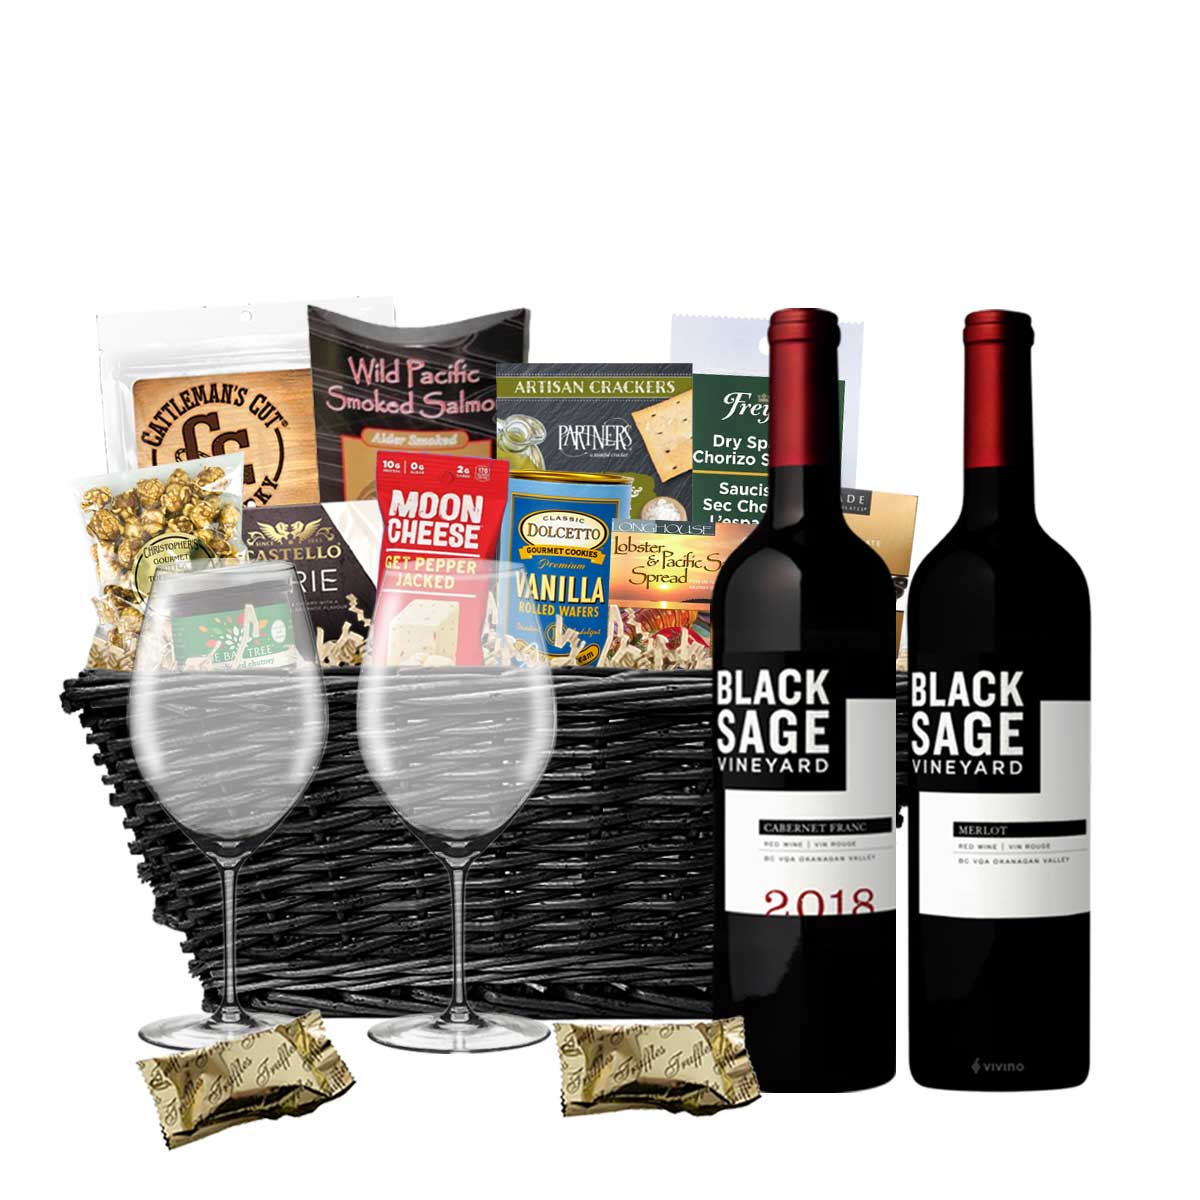 TAG Liquor Stores BC - Black Sage Cabernet Franc & Black Sage Merlot 750ml x 2 Gift Basket